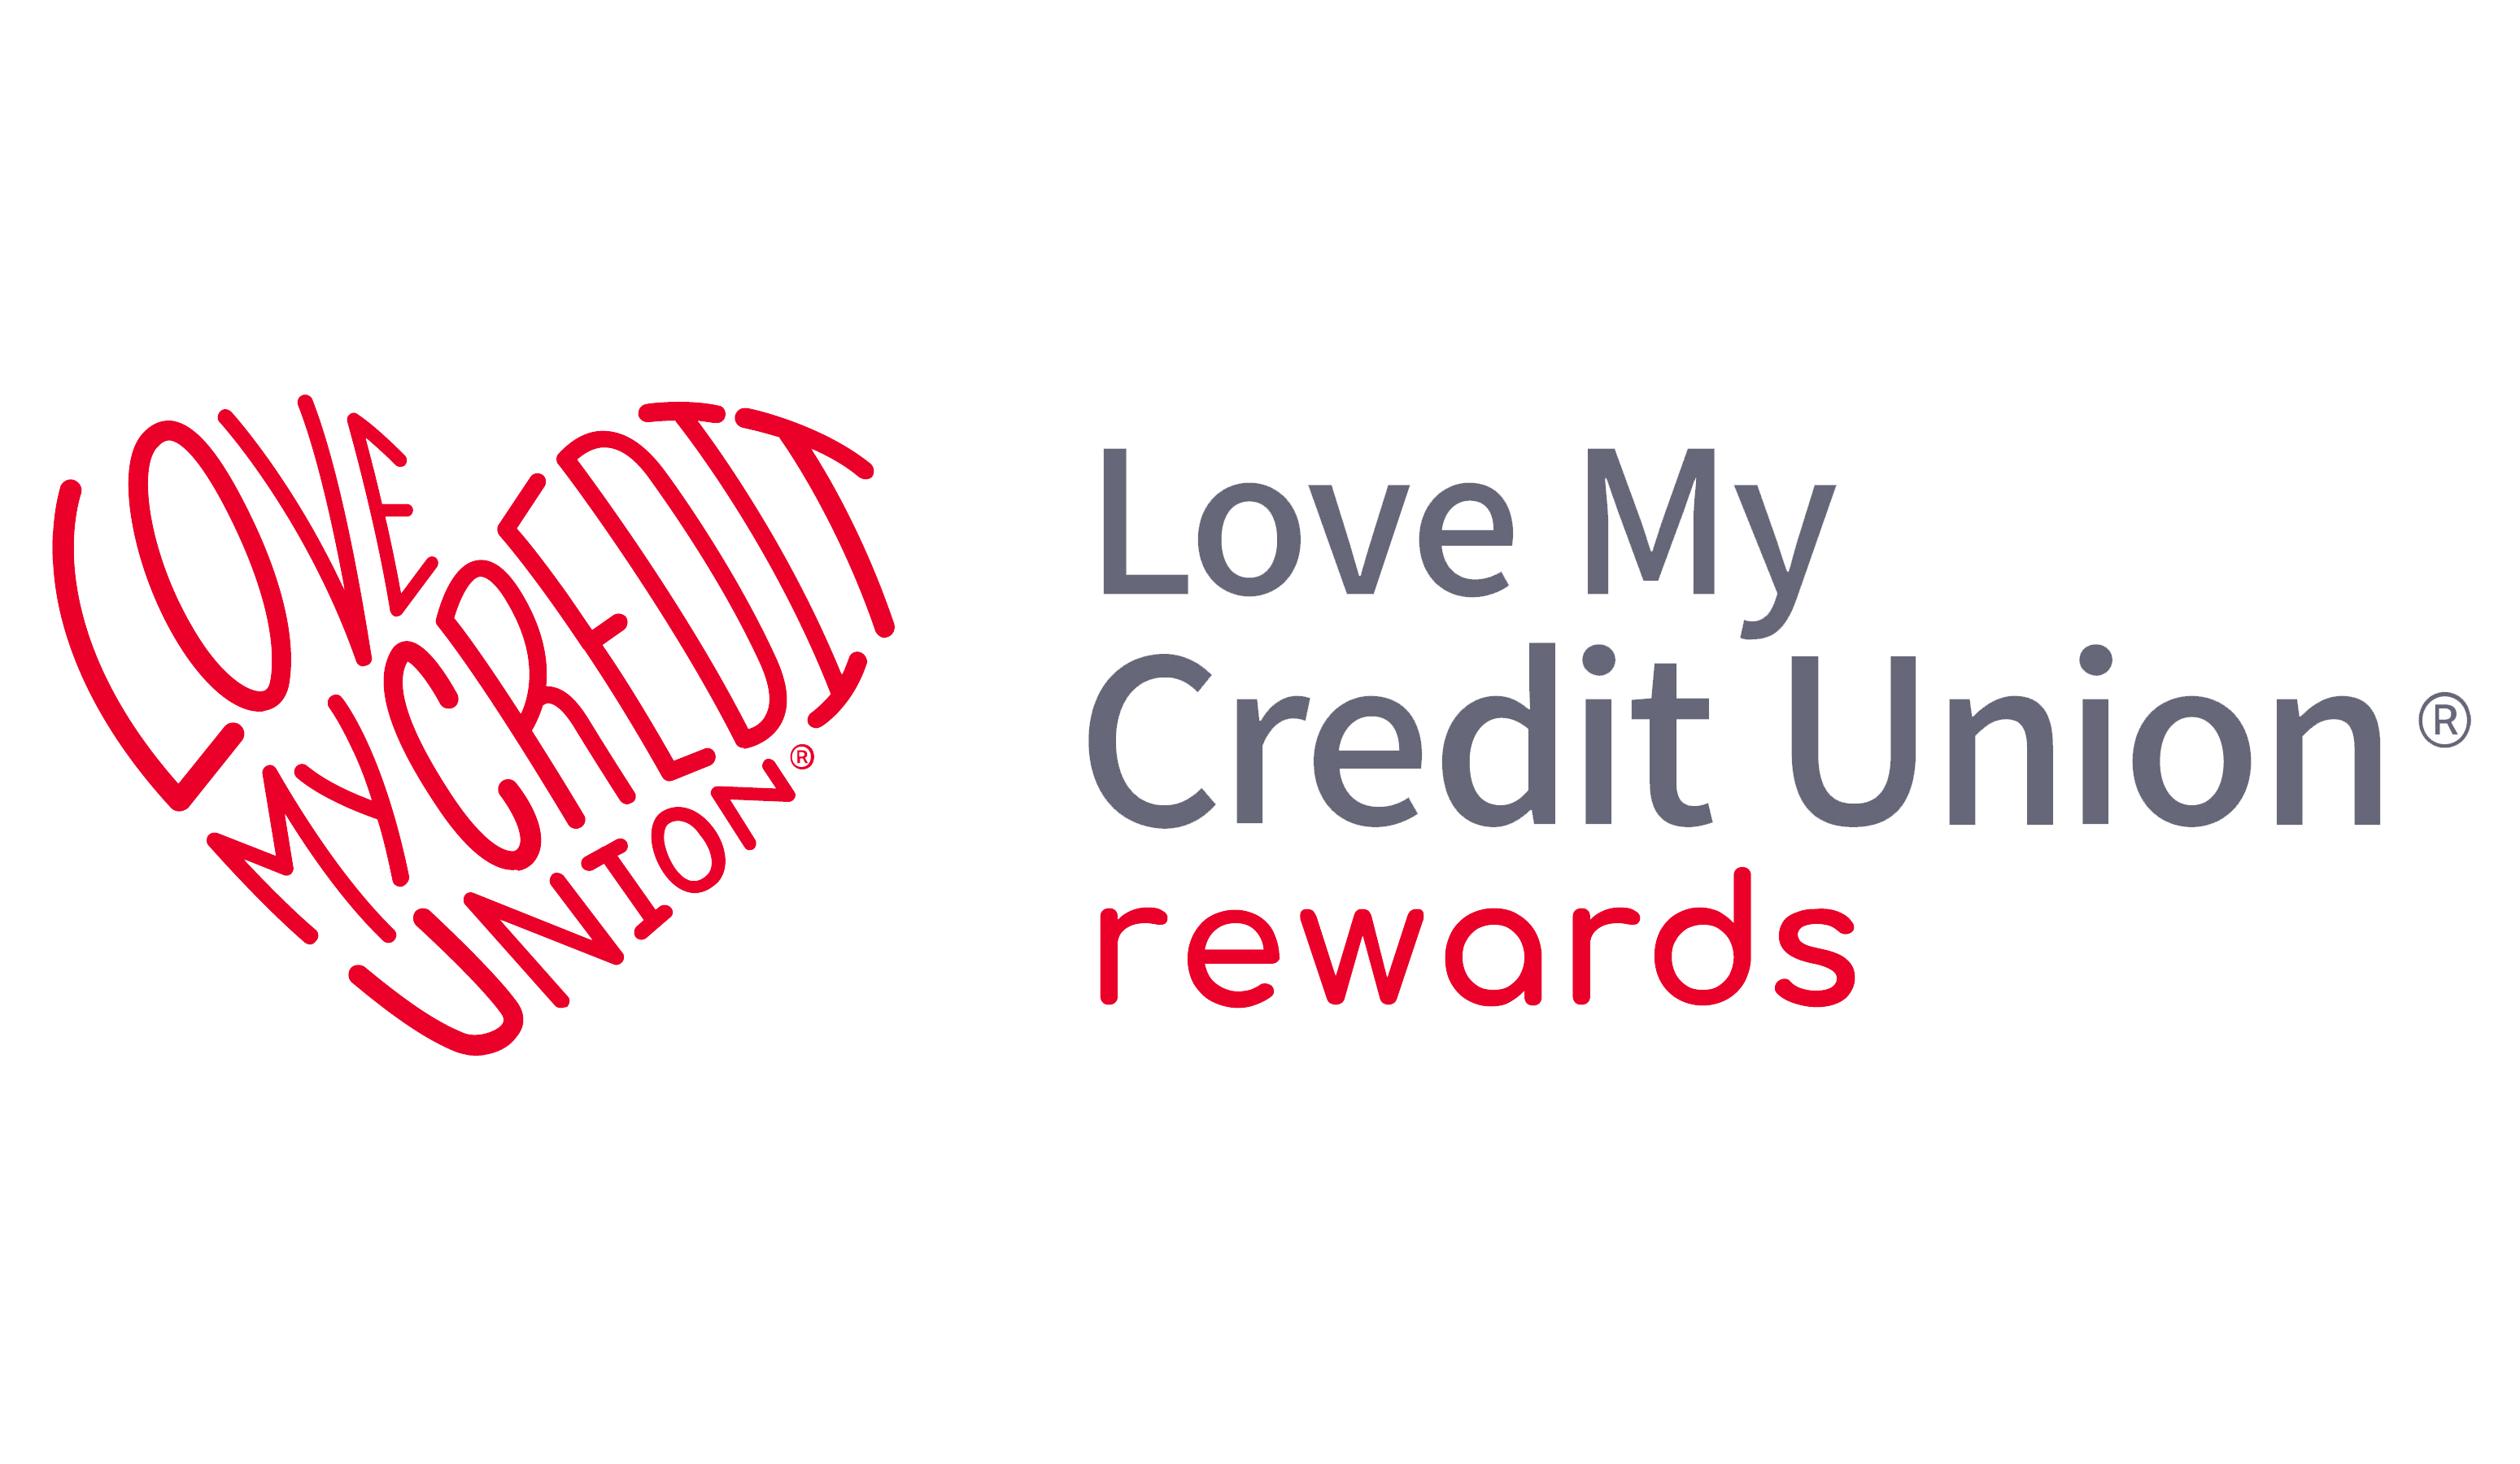 Love My Credit Union Rewards